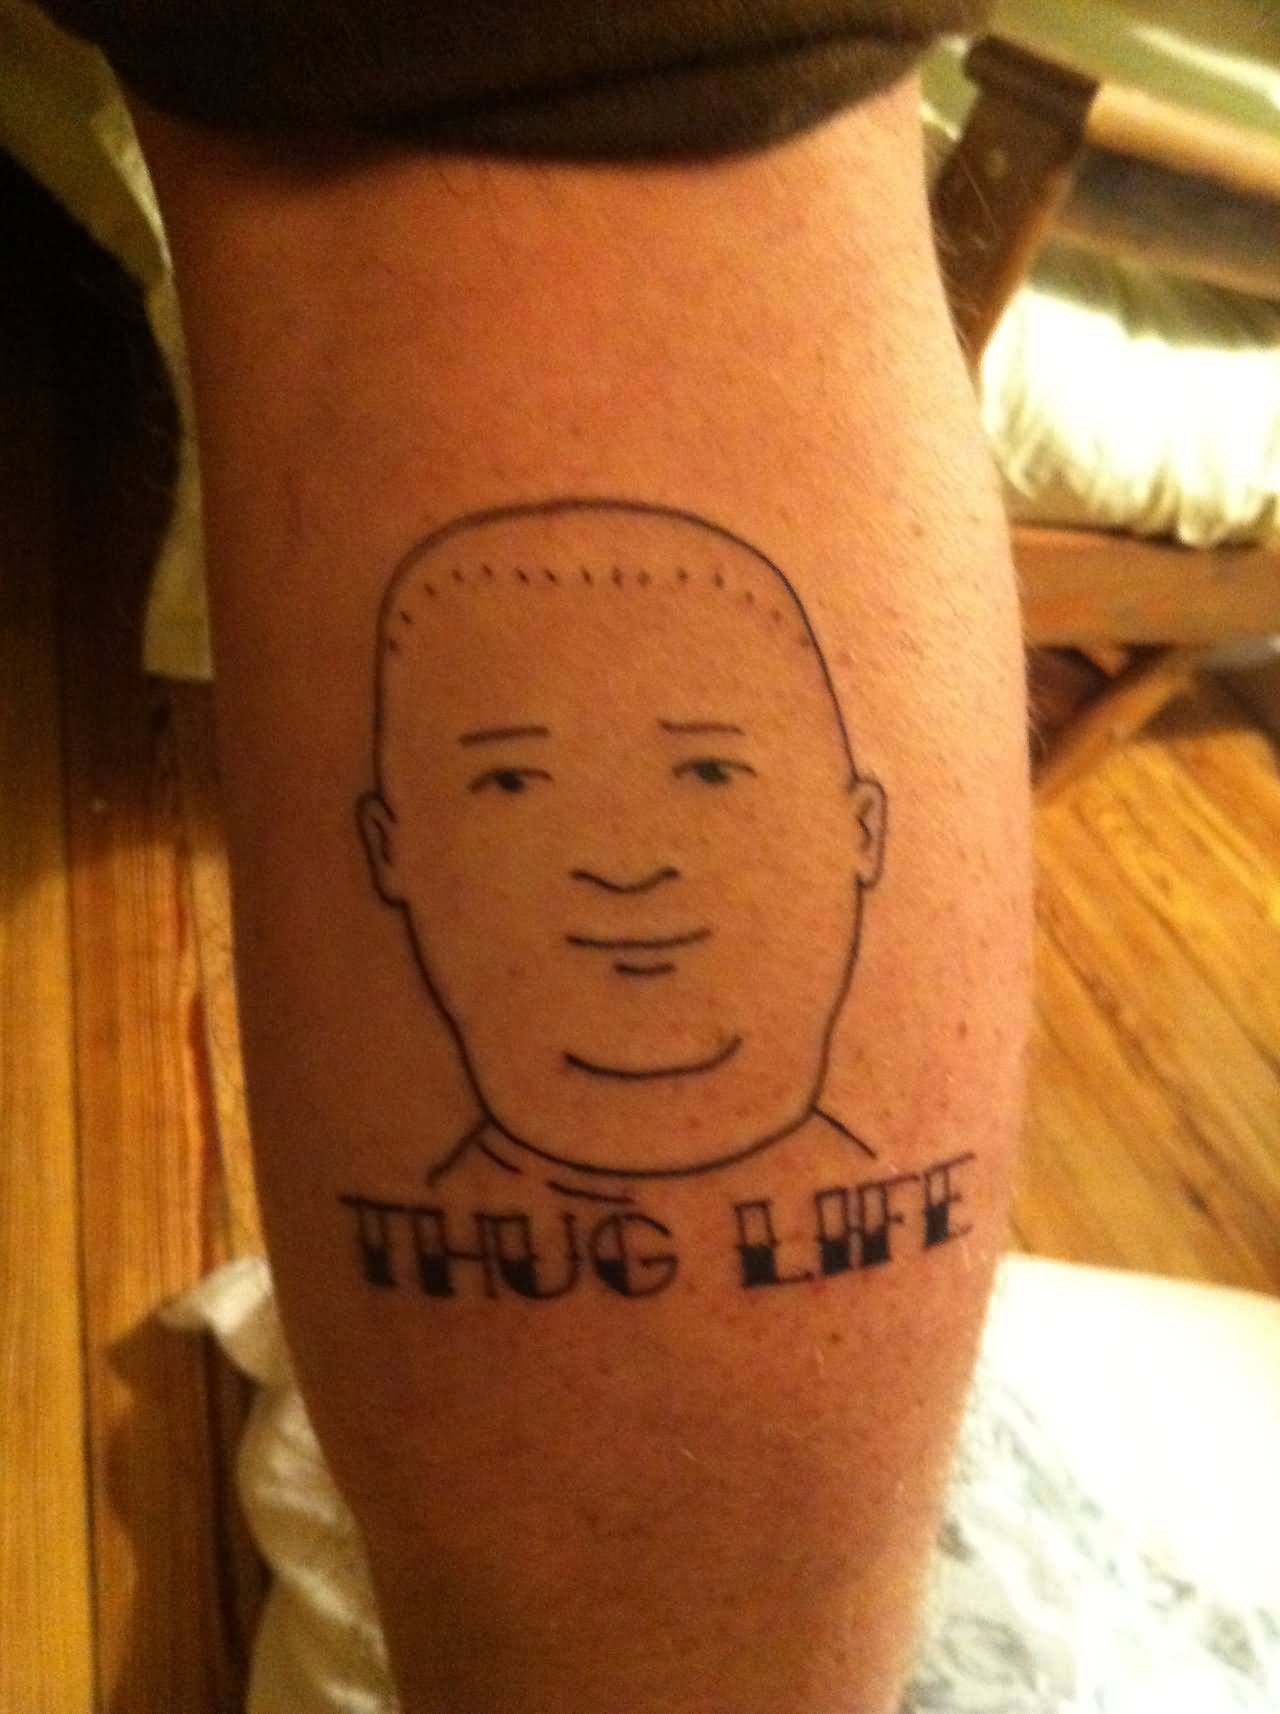 Thug Life - Black Outline Face Tattoo On Leg Calf